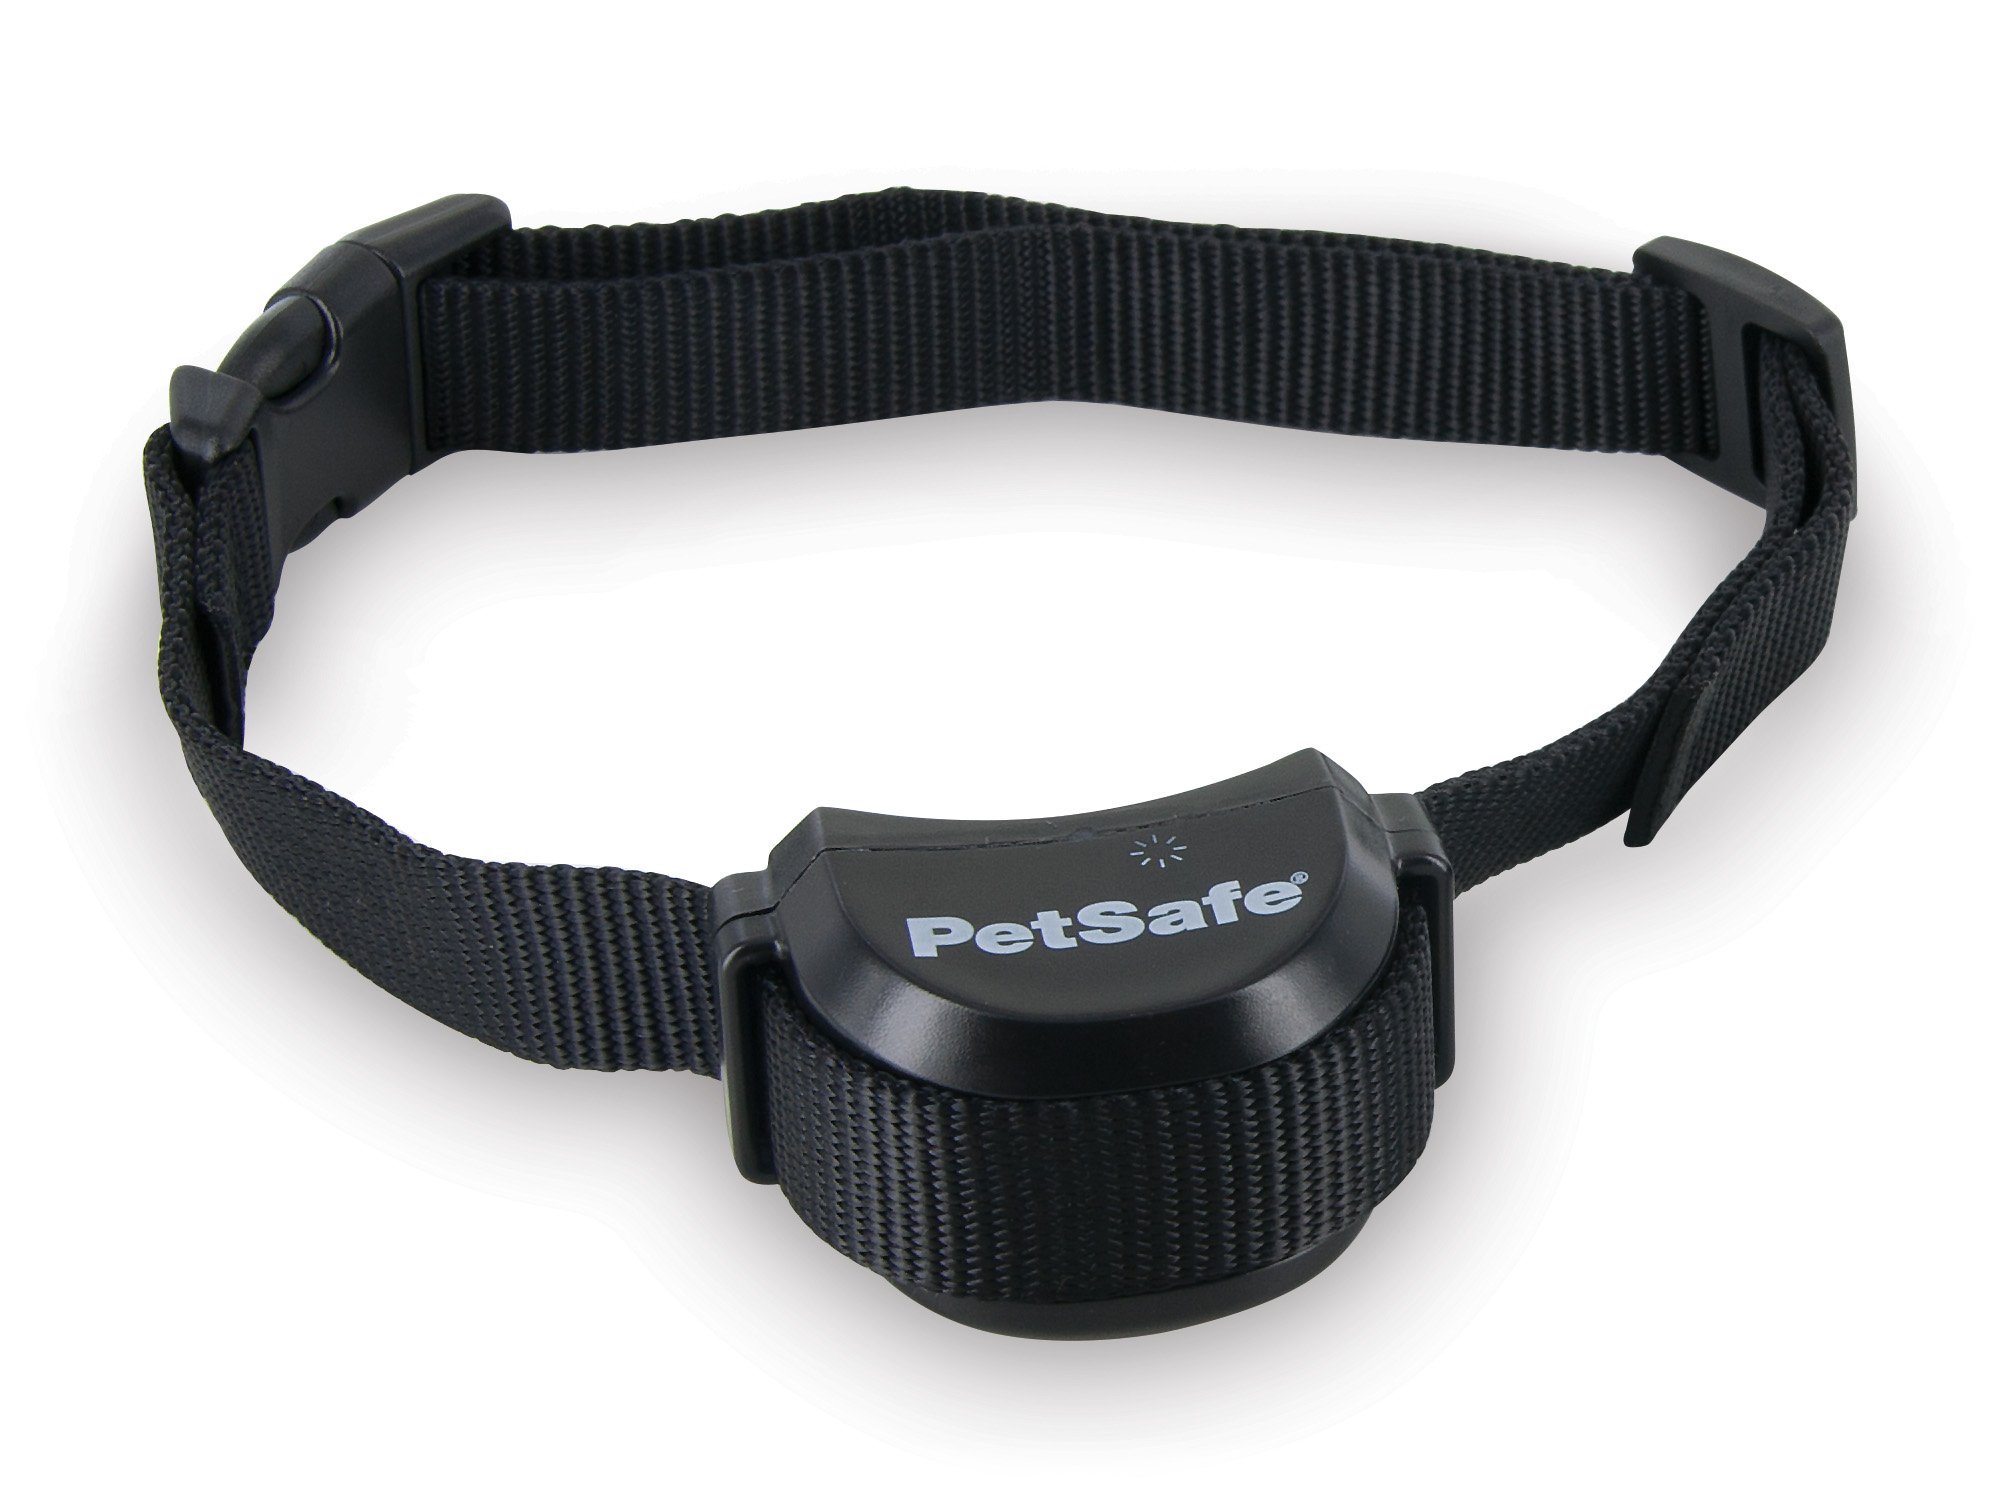 petsafe wireless fence collar